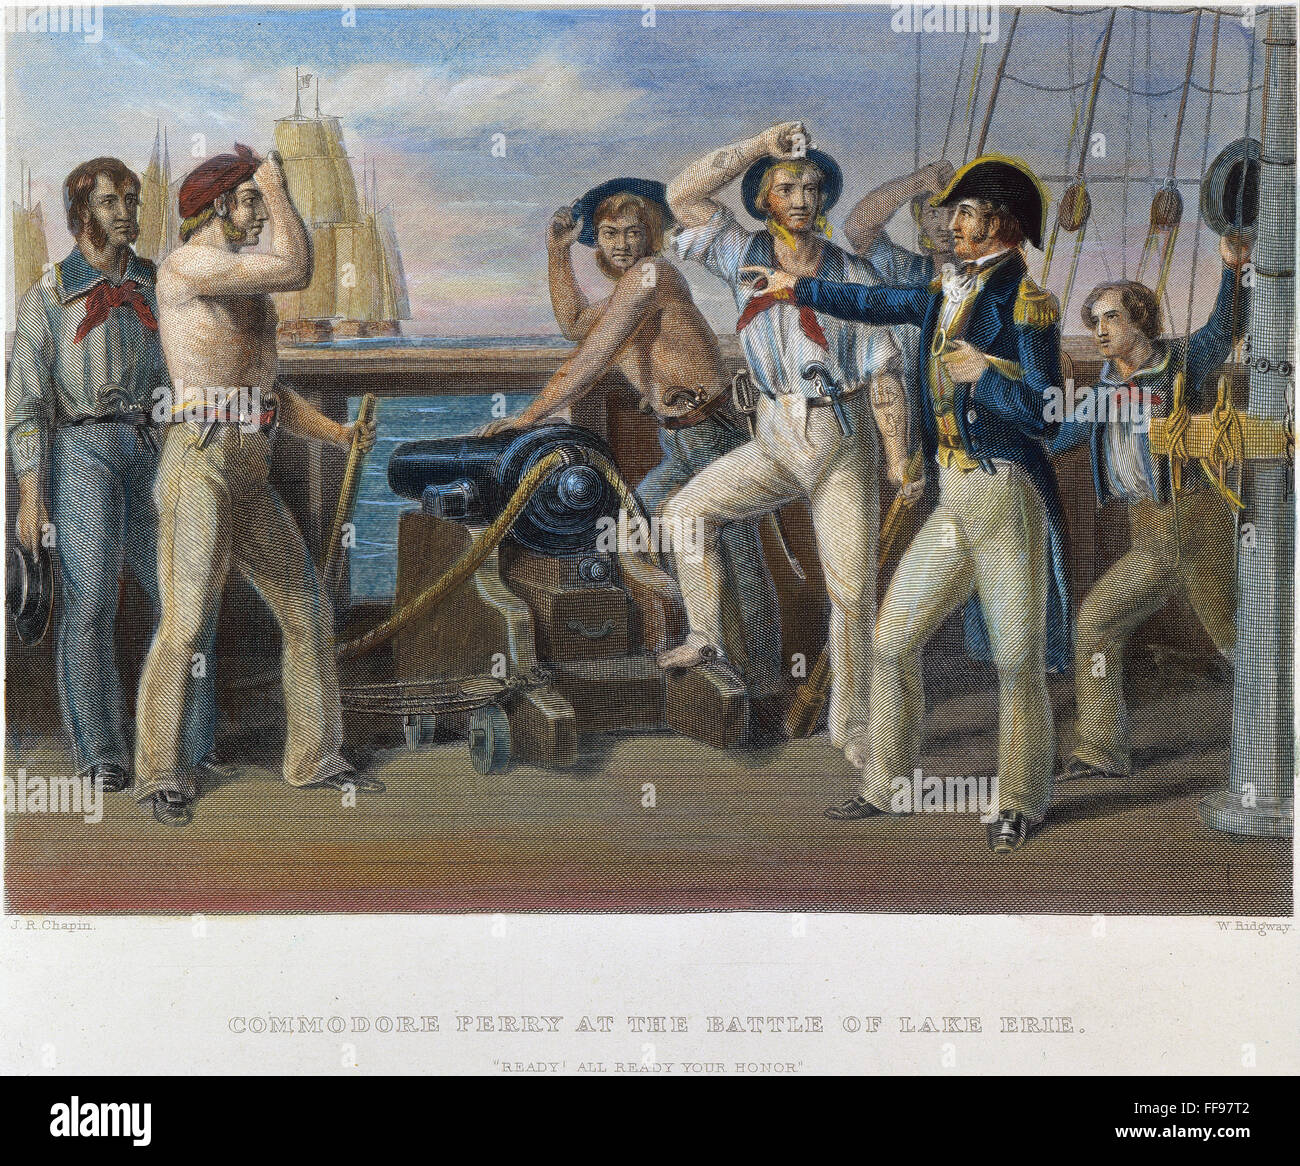 PERRY: la batalla del lago Erie. /NCommodore peligro Oliver Perry en la batalla del lago Erie, 10 de septiembre de 1813. Acero grabado, del siglo XIX. Foto de stock